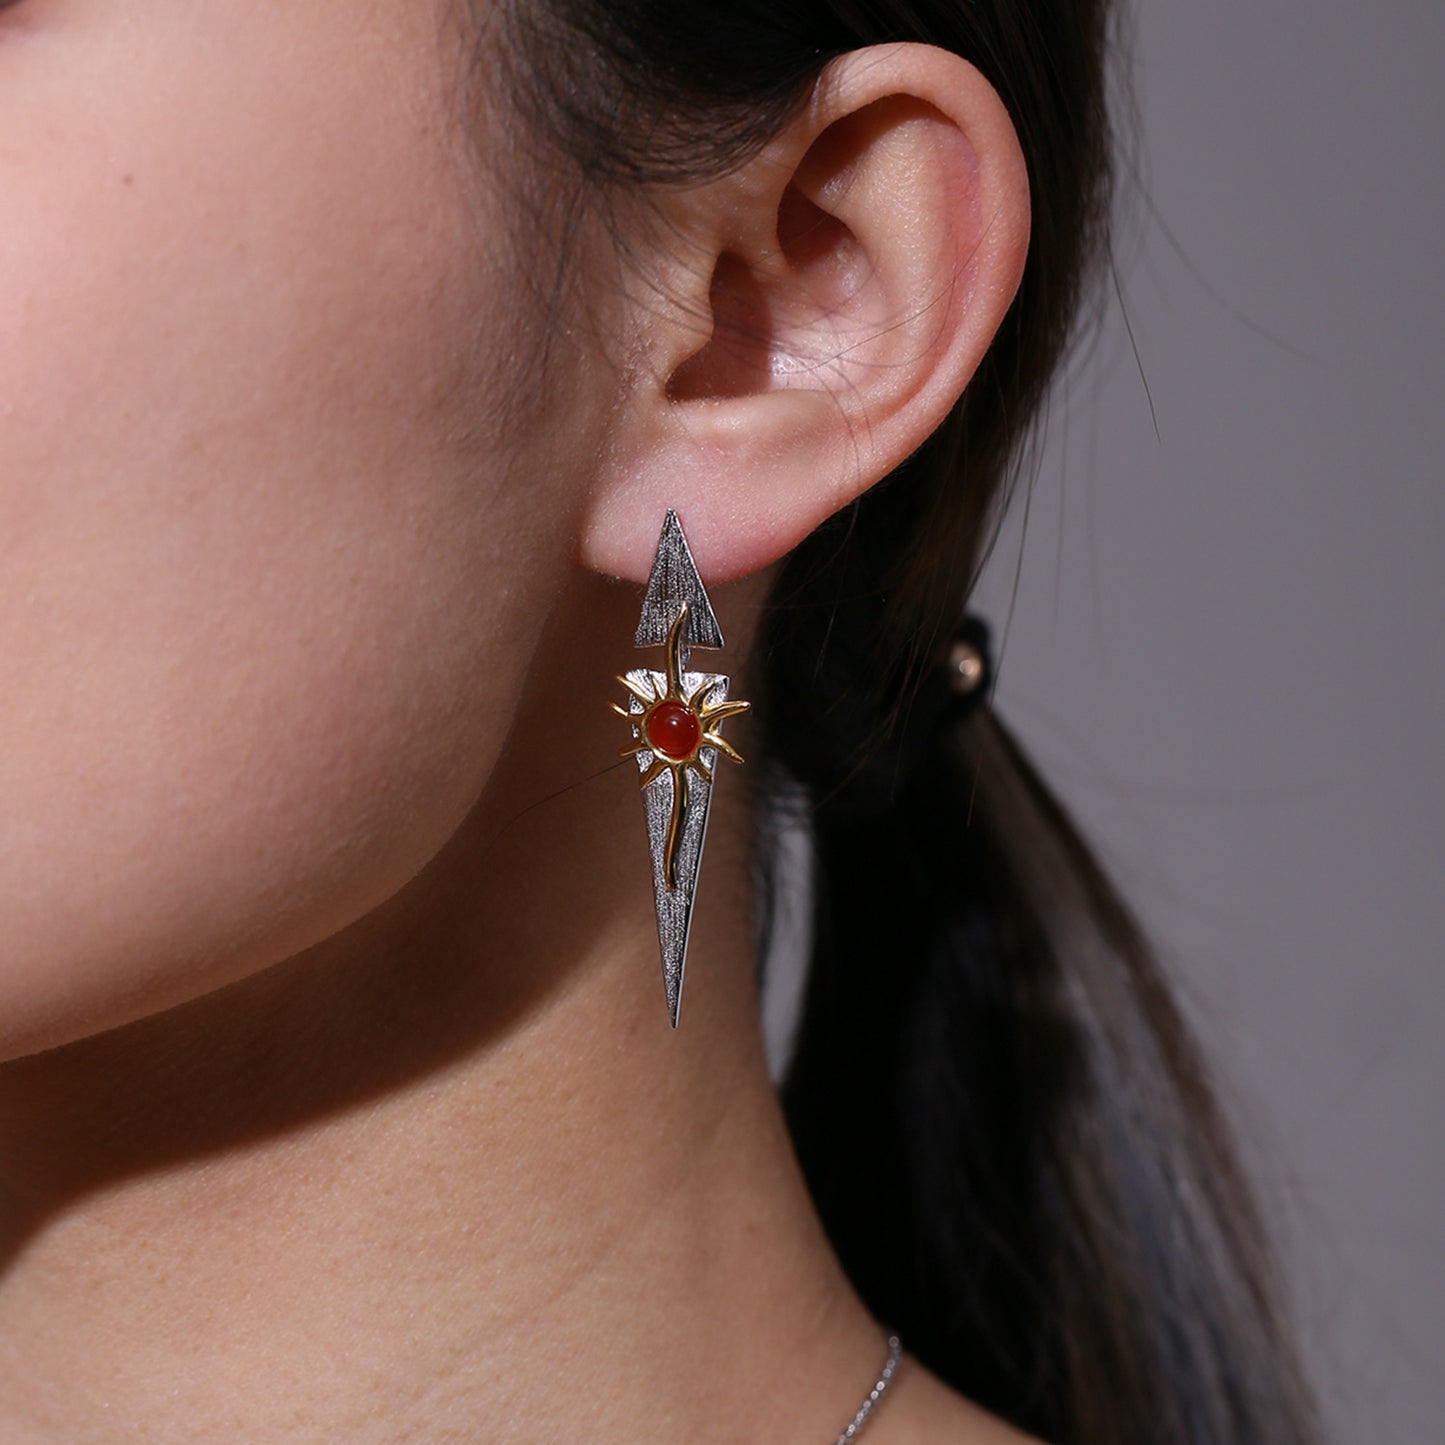 Natural Colourful Gemstone Sun Goddess Design Silver Drop Earrings for Women